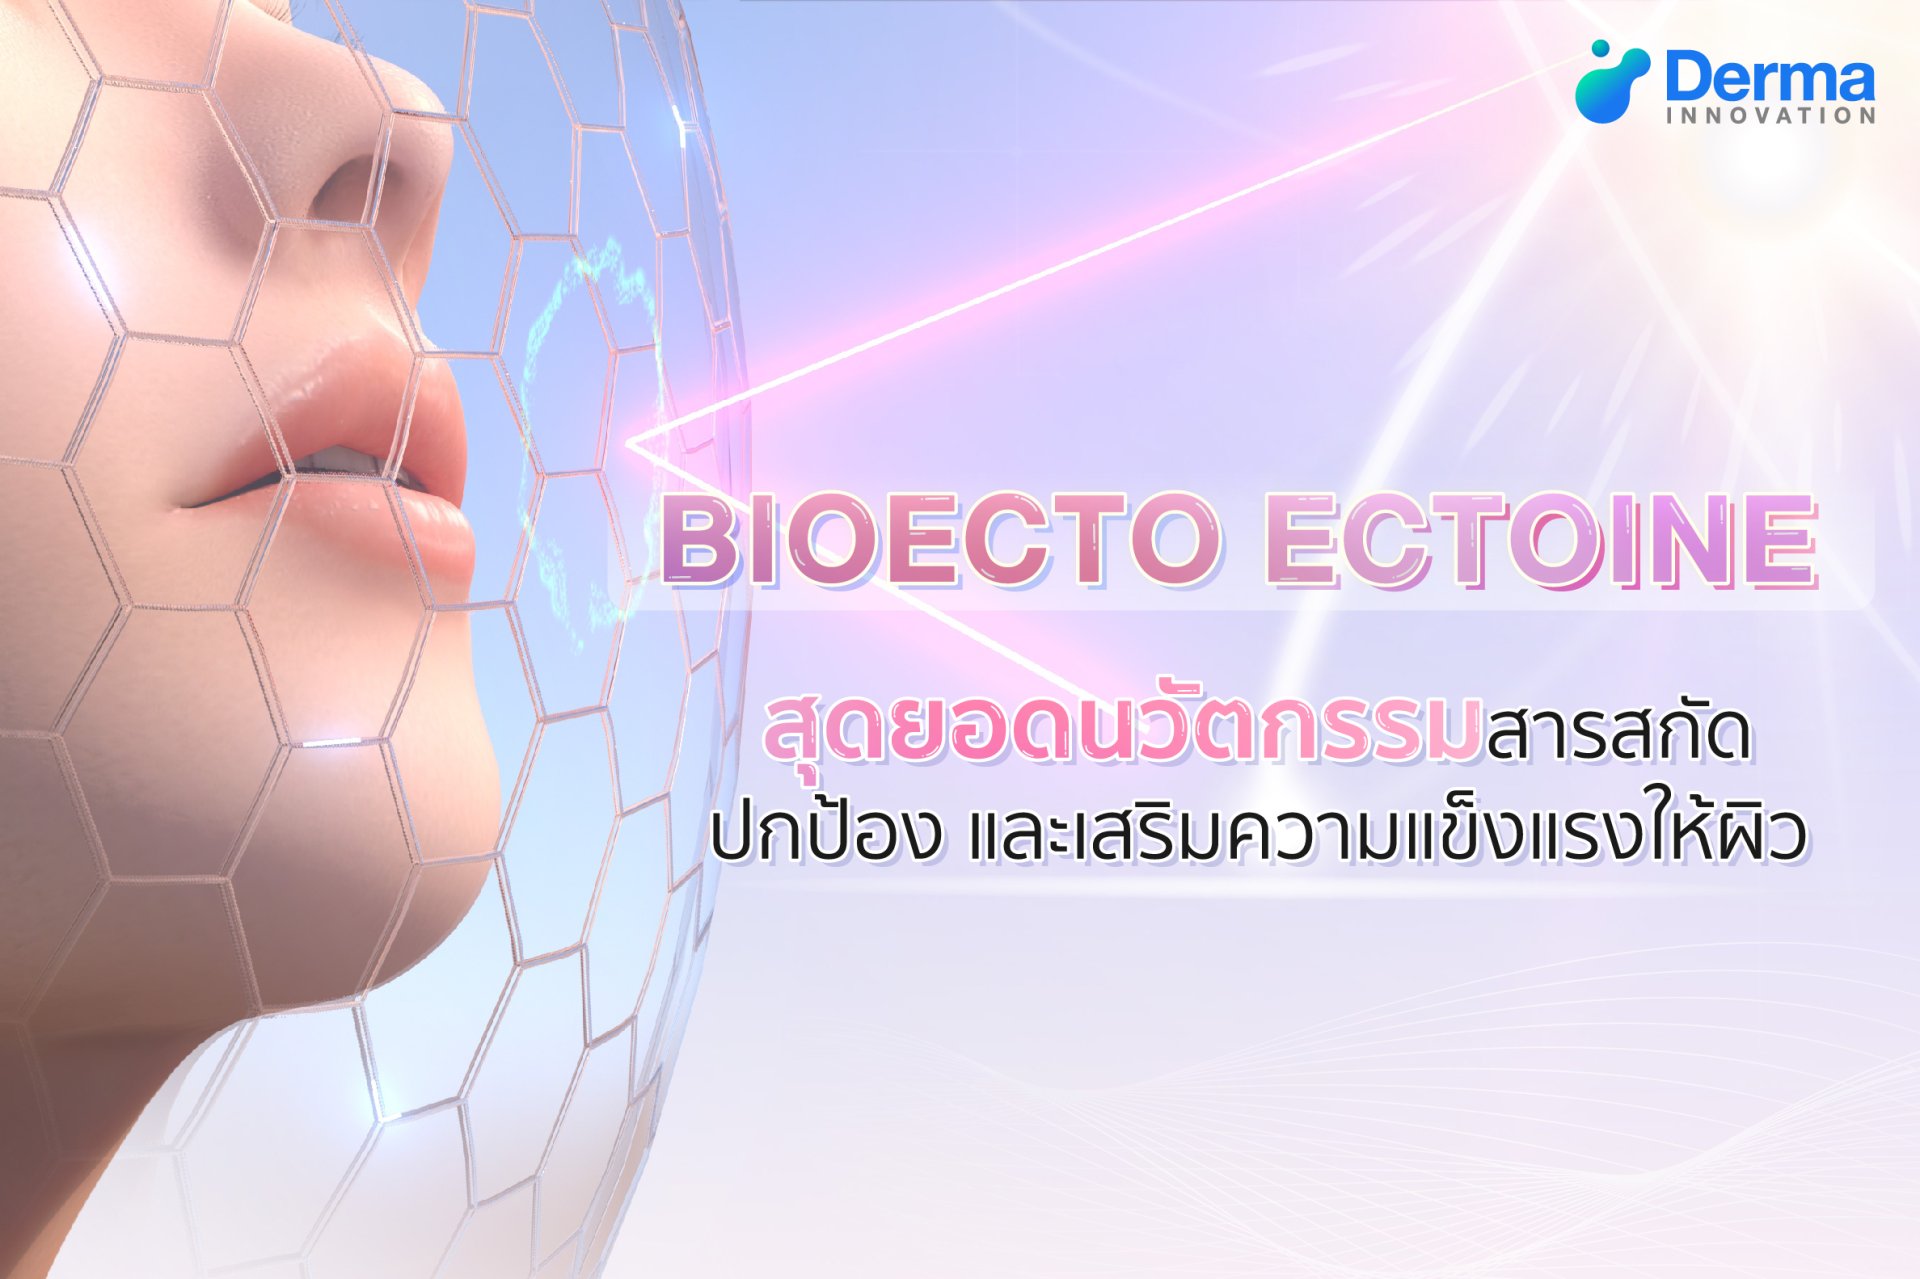 Bioecto Ectoine นวัตกรรมสารสกัดเสริมความแข็งแรงให้ผิว  